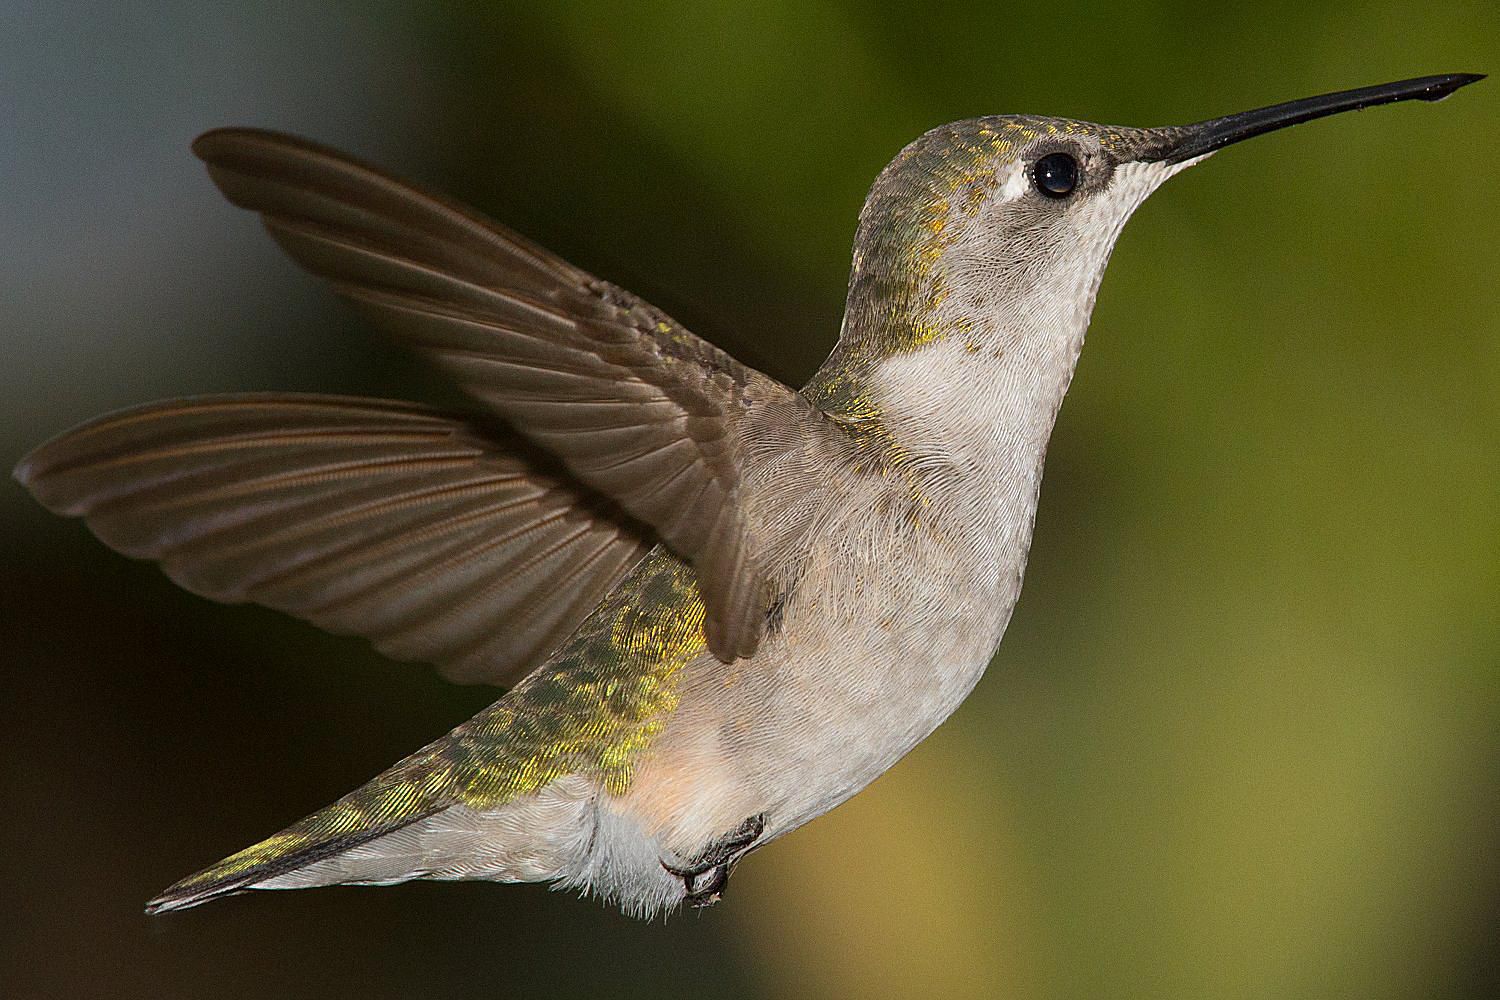 Hummingbird Wings and How Hummingbirds Fly